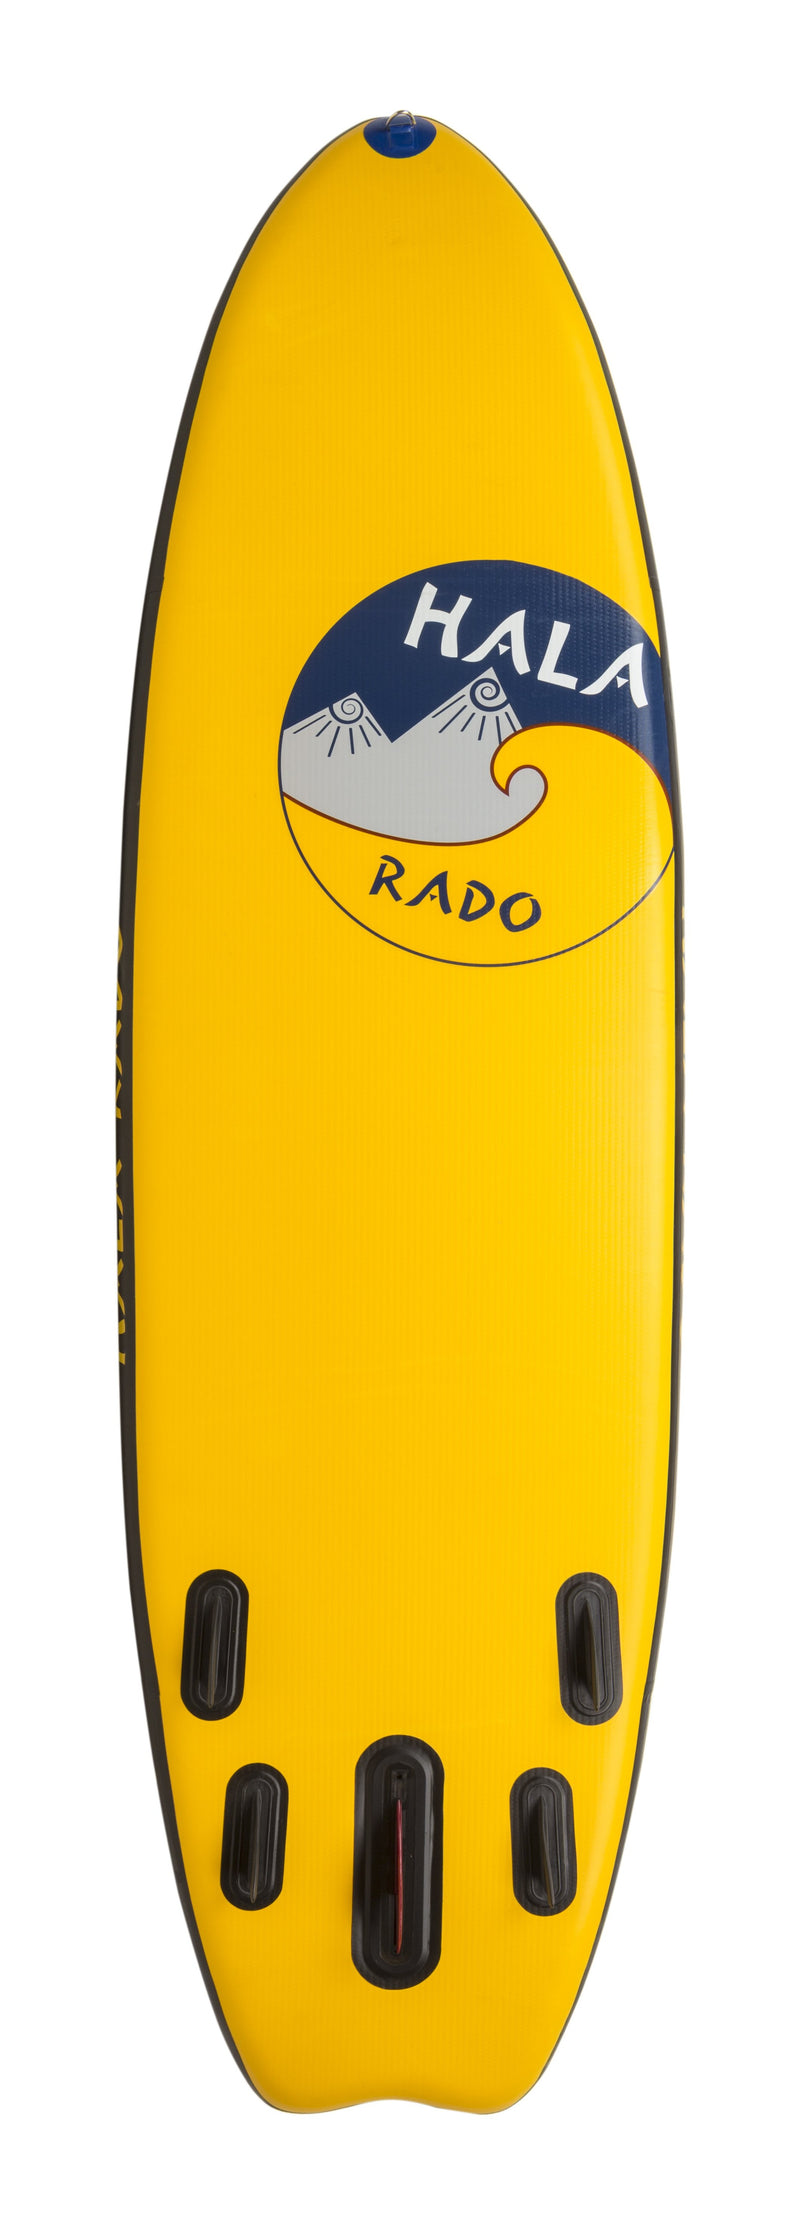 Rado 2018 Closeout